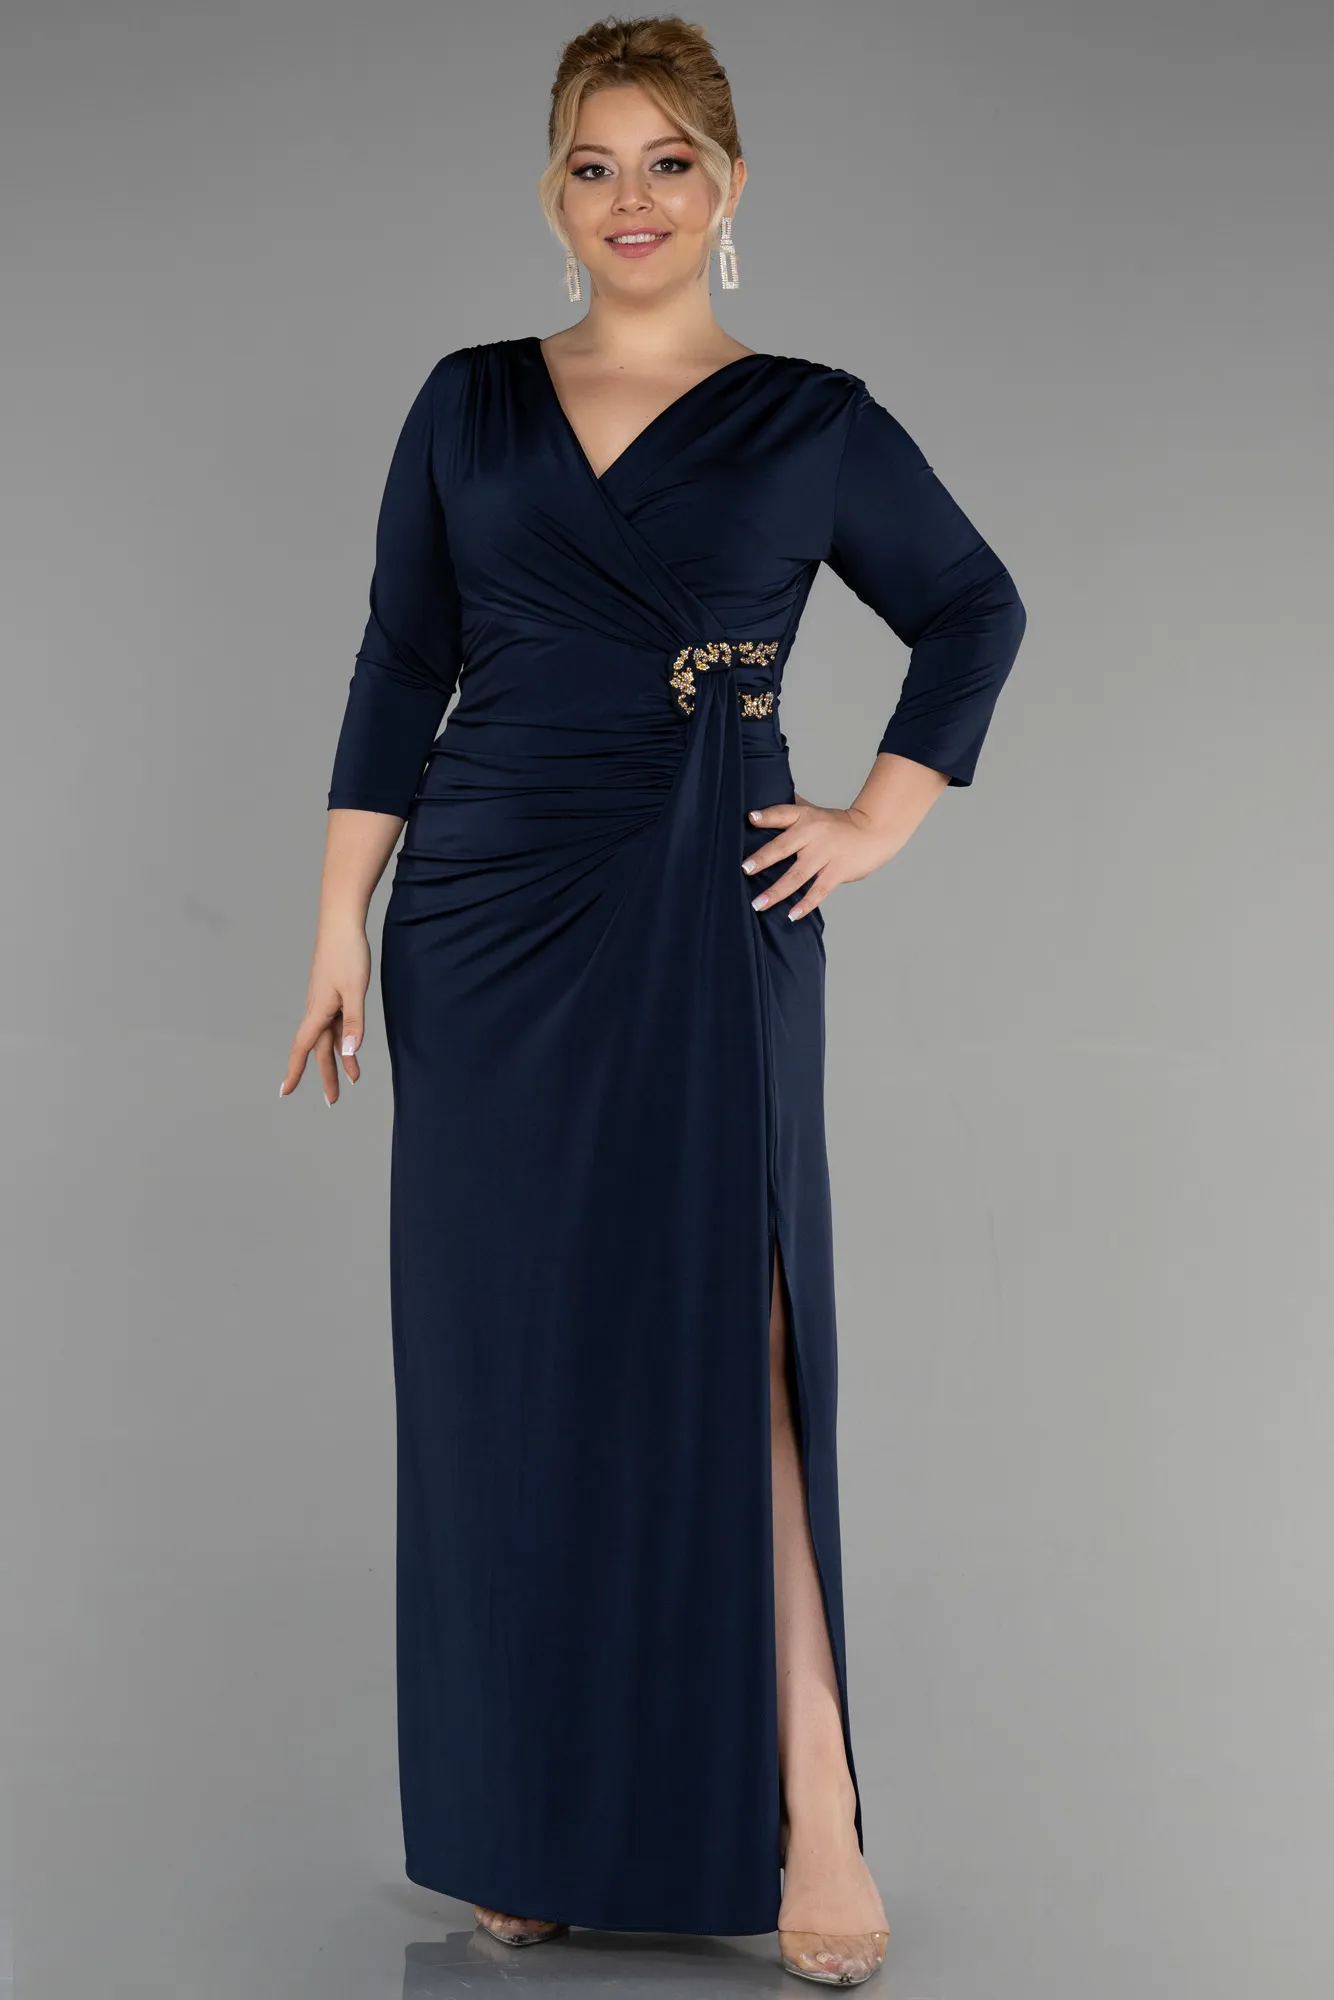 Navy Blue-Long Plus Size Evening Dress ABU3467